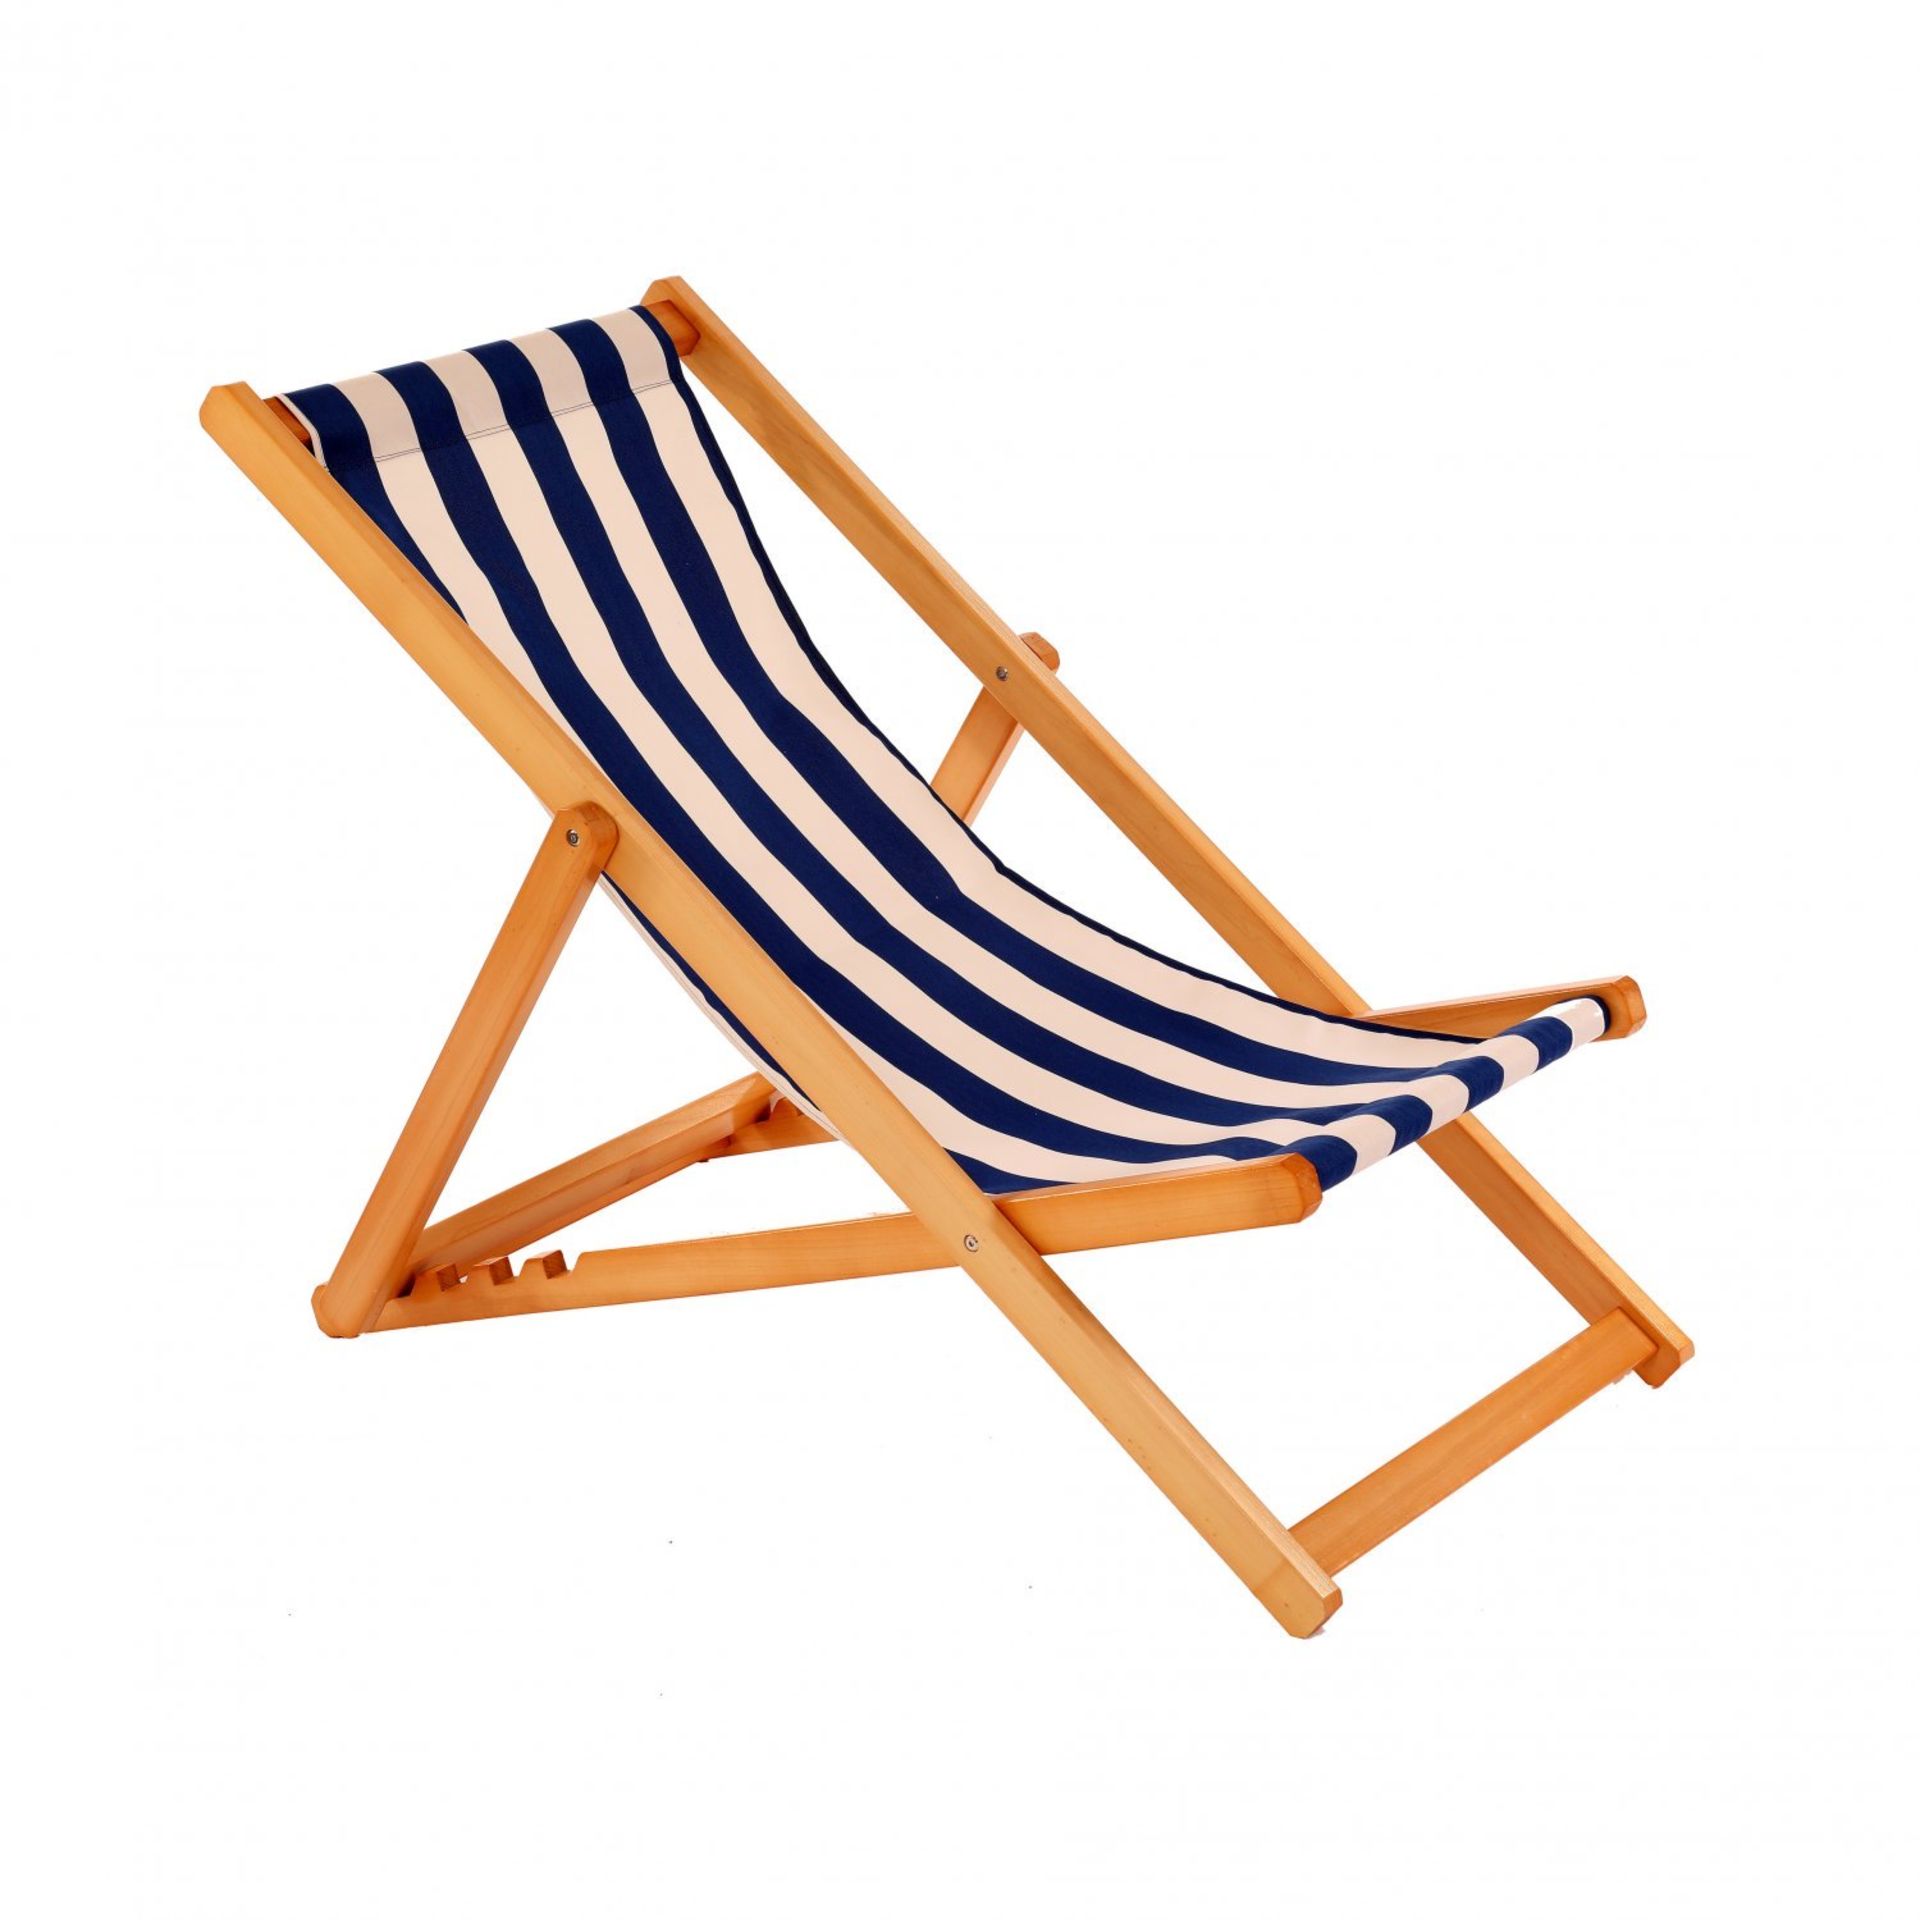 (F5) Traditional Folding Hardwood Garden Beach Deck Chairs Deckchairs Folded measurements: 1...